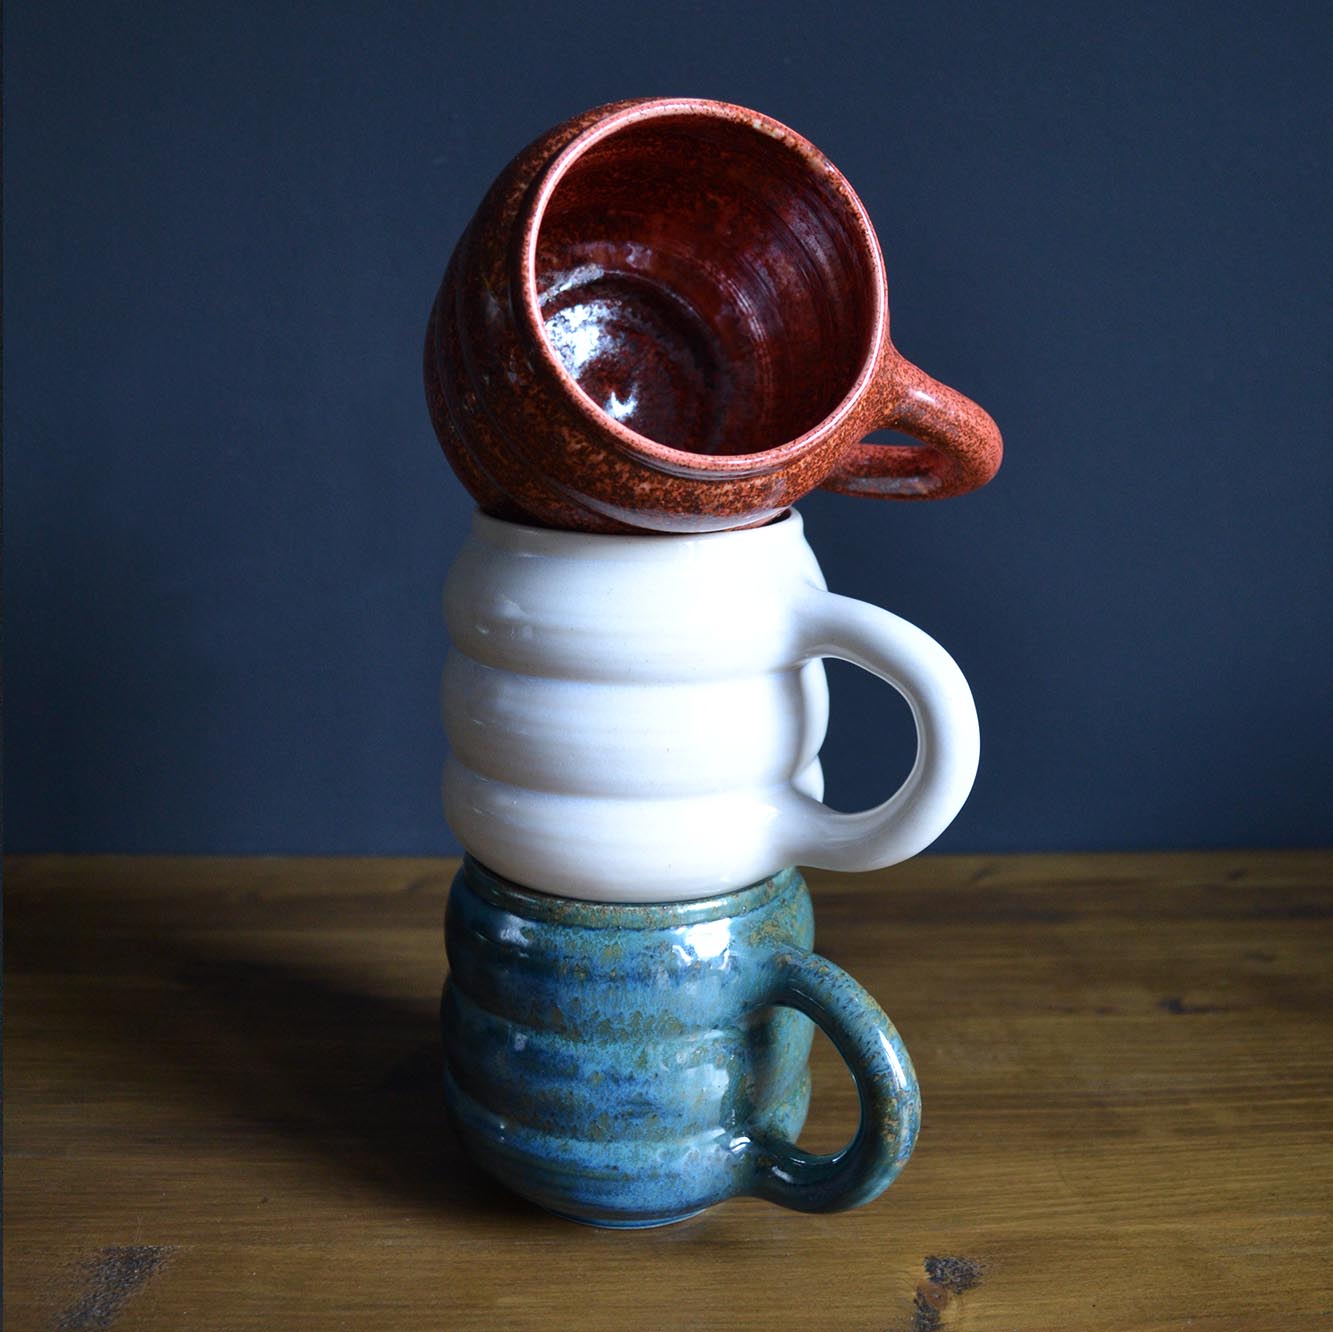 Wobbly terracotta mug